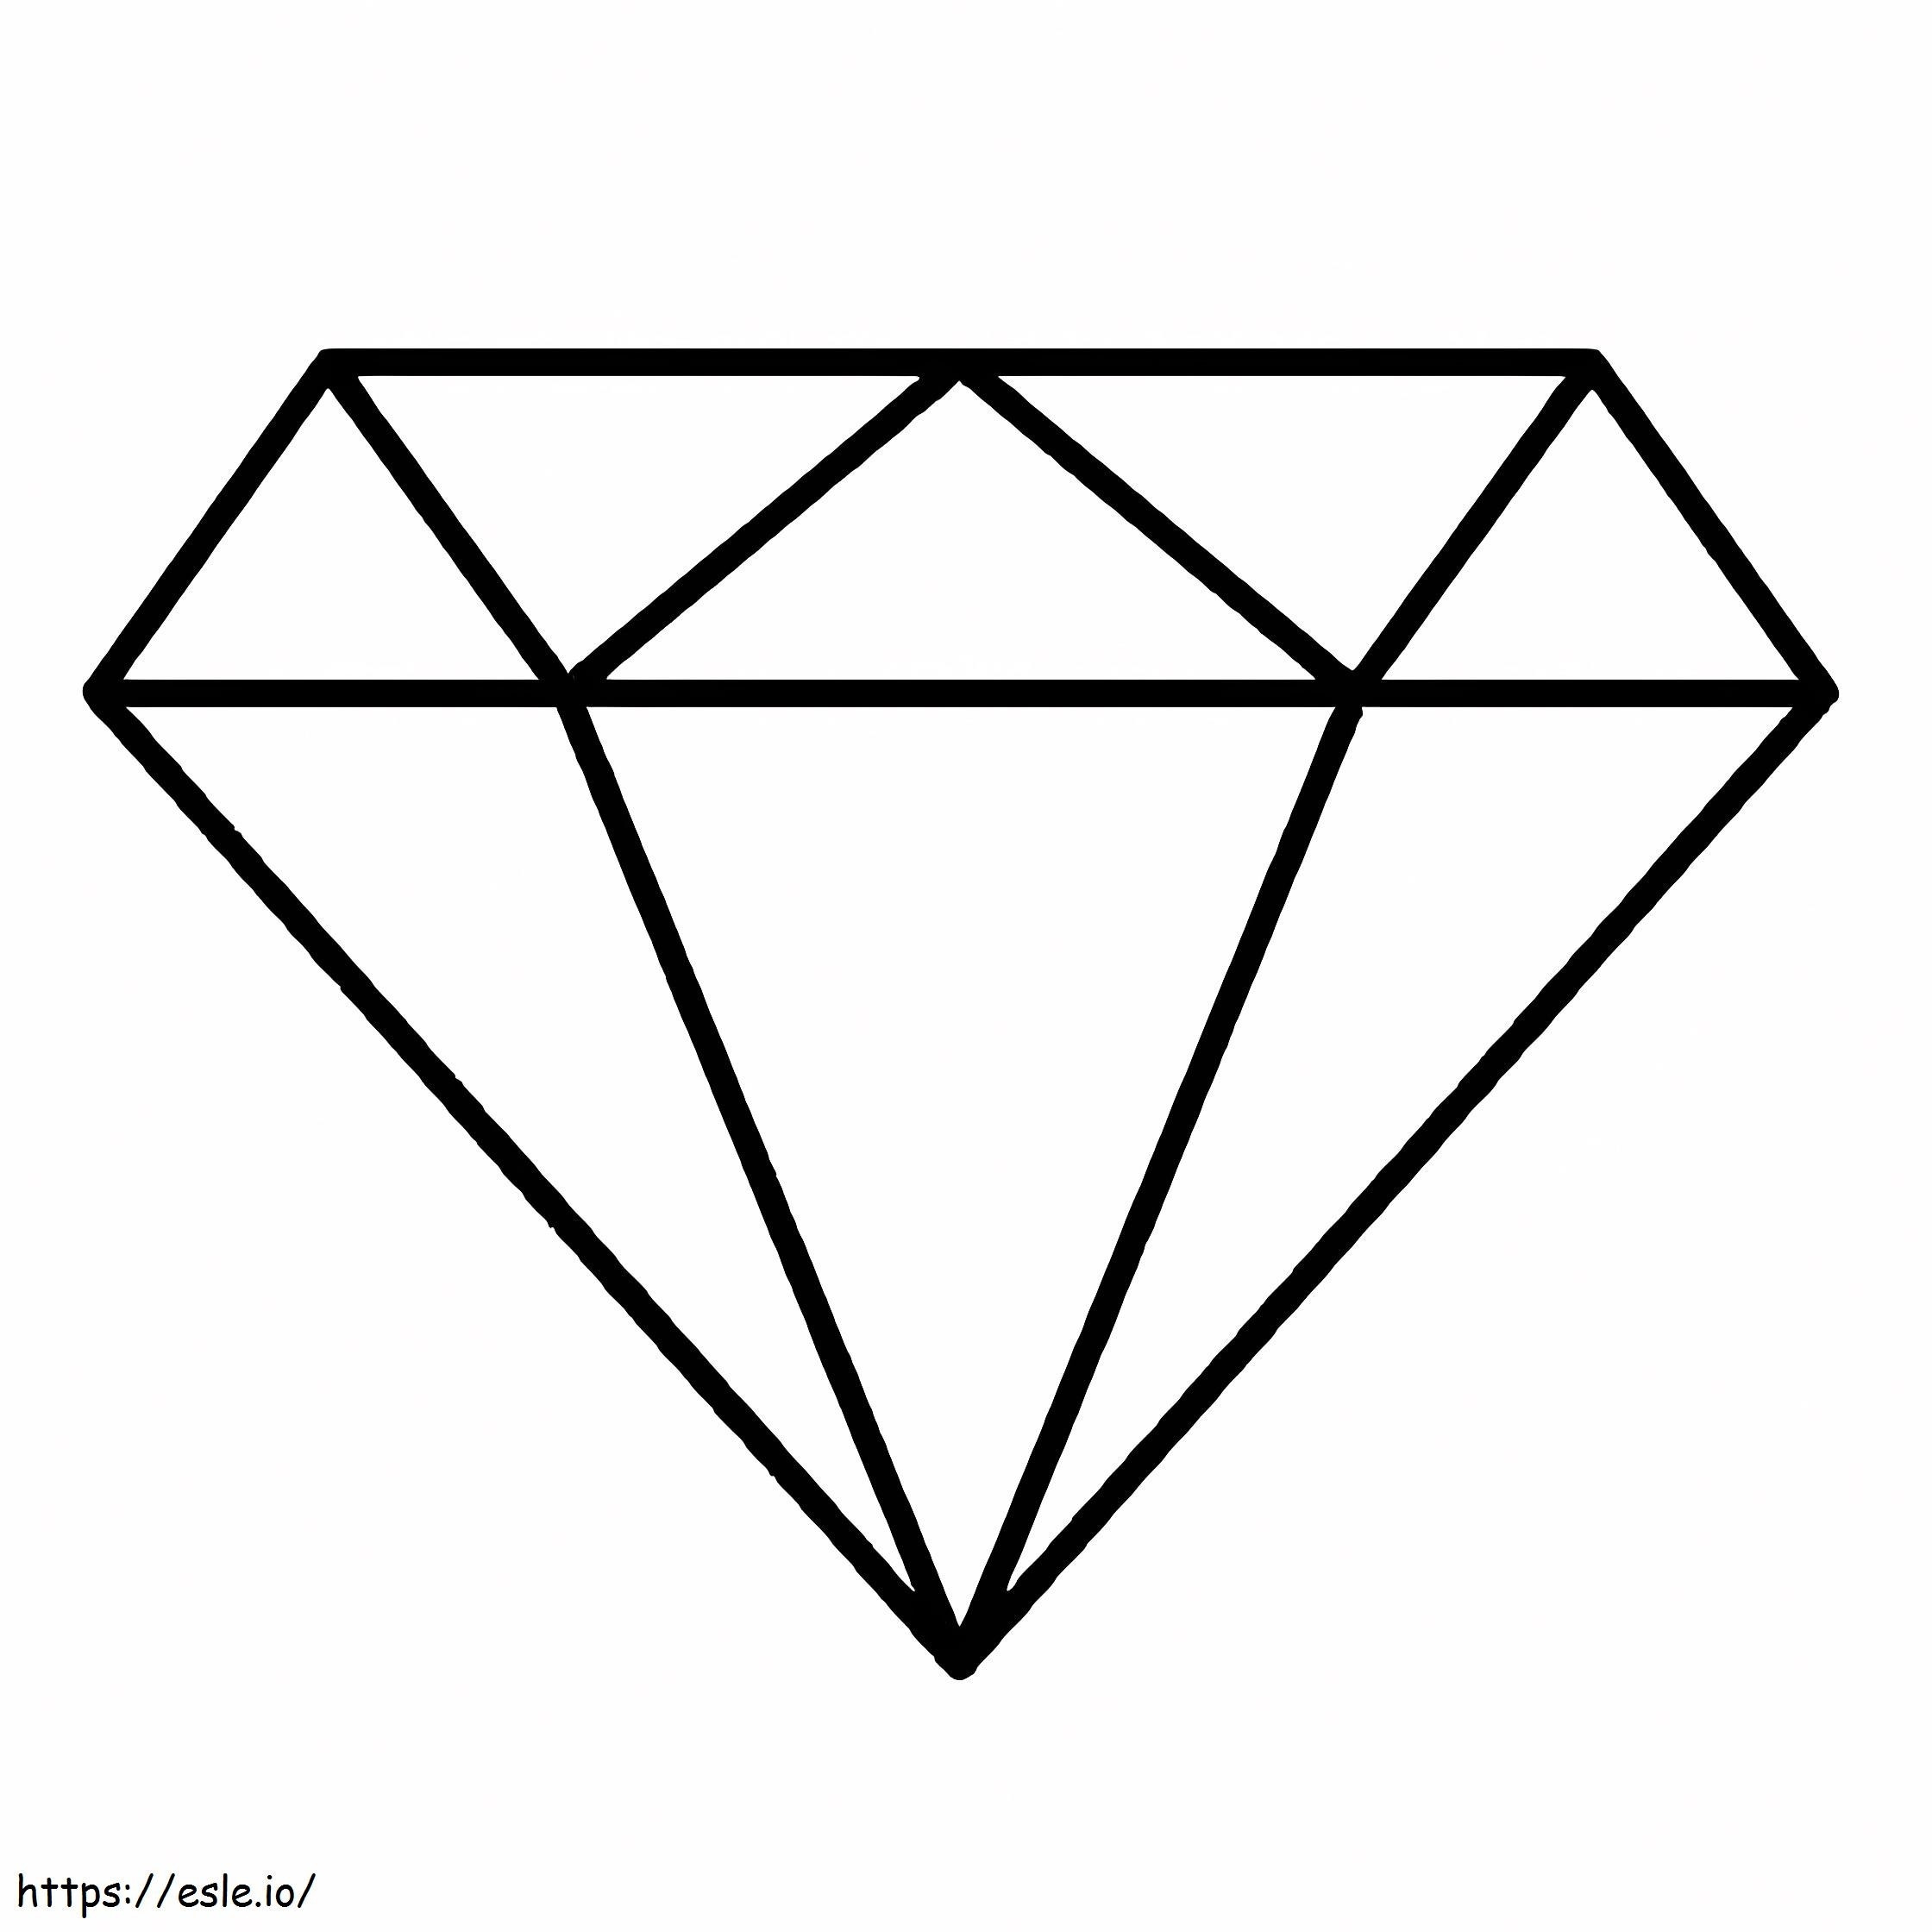 Diamond Shape coloring page